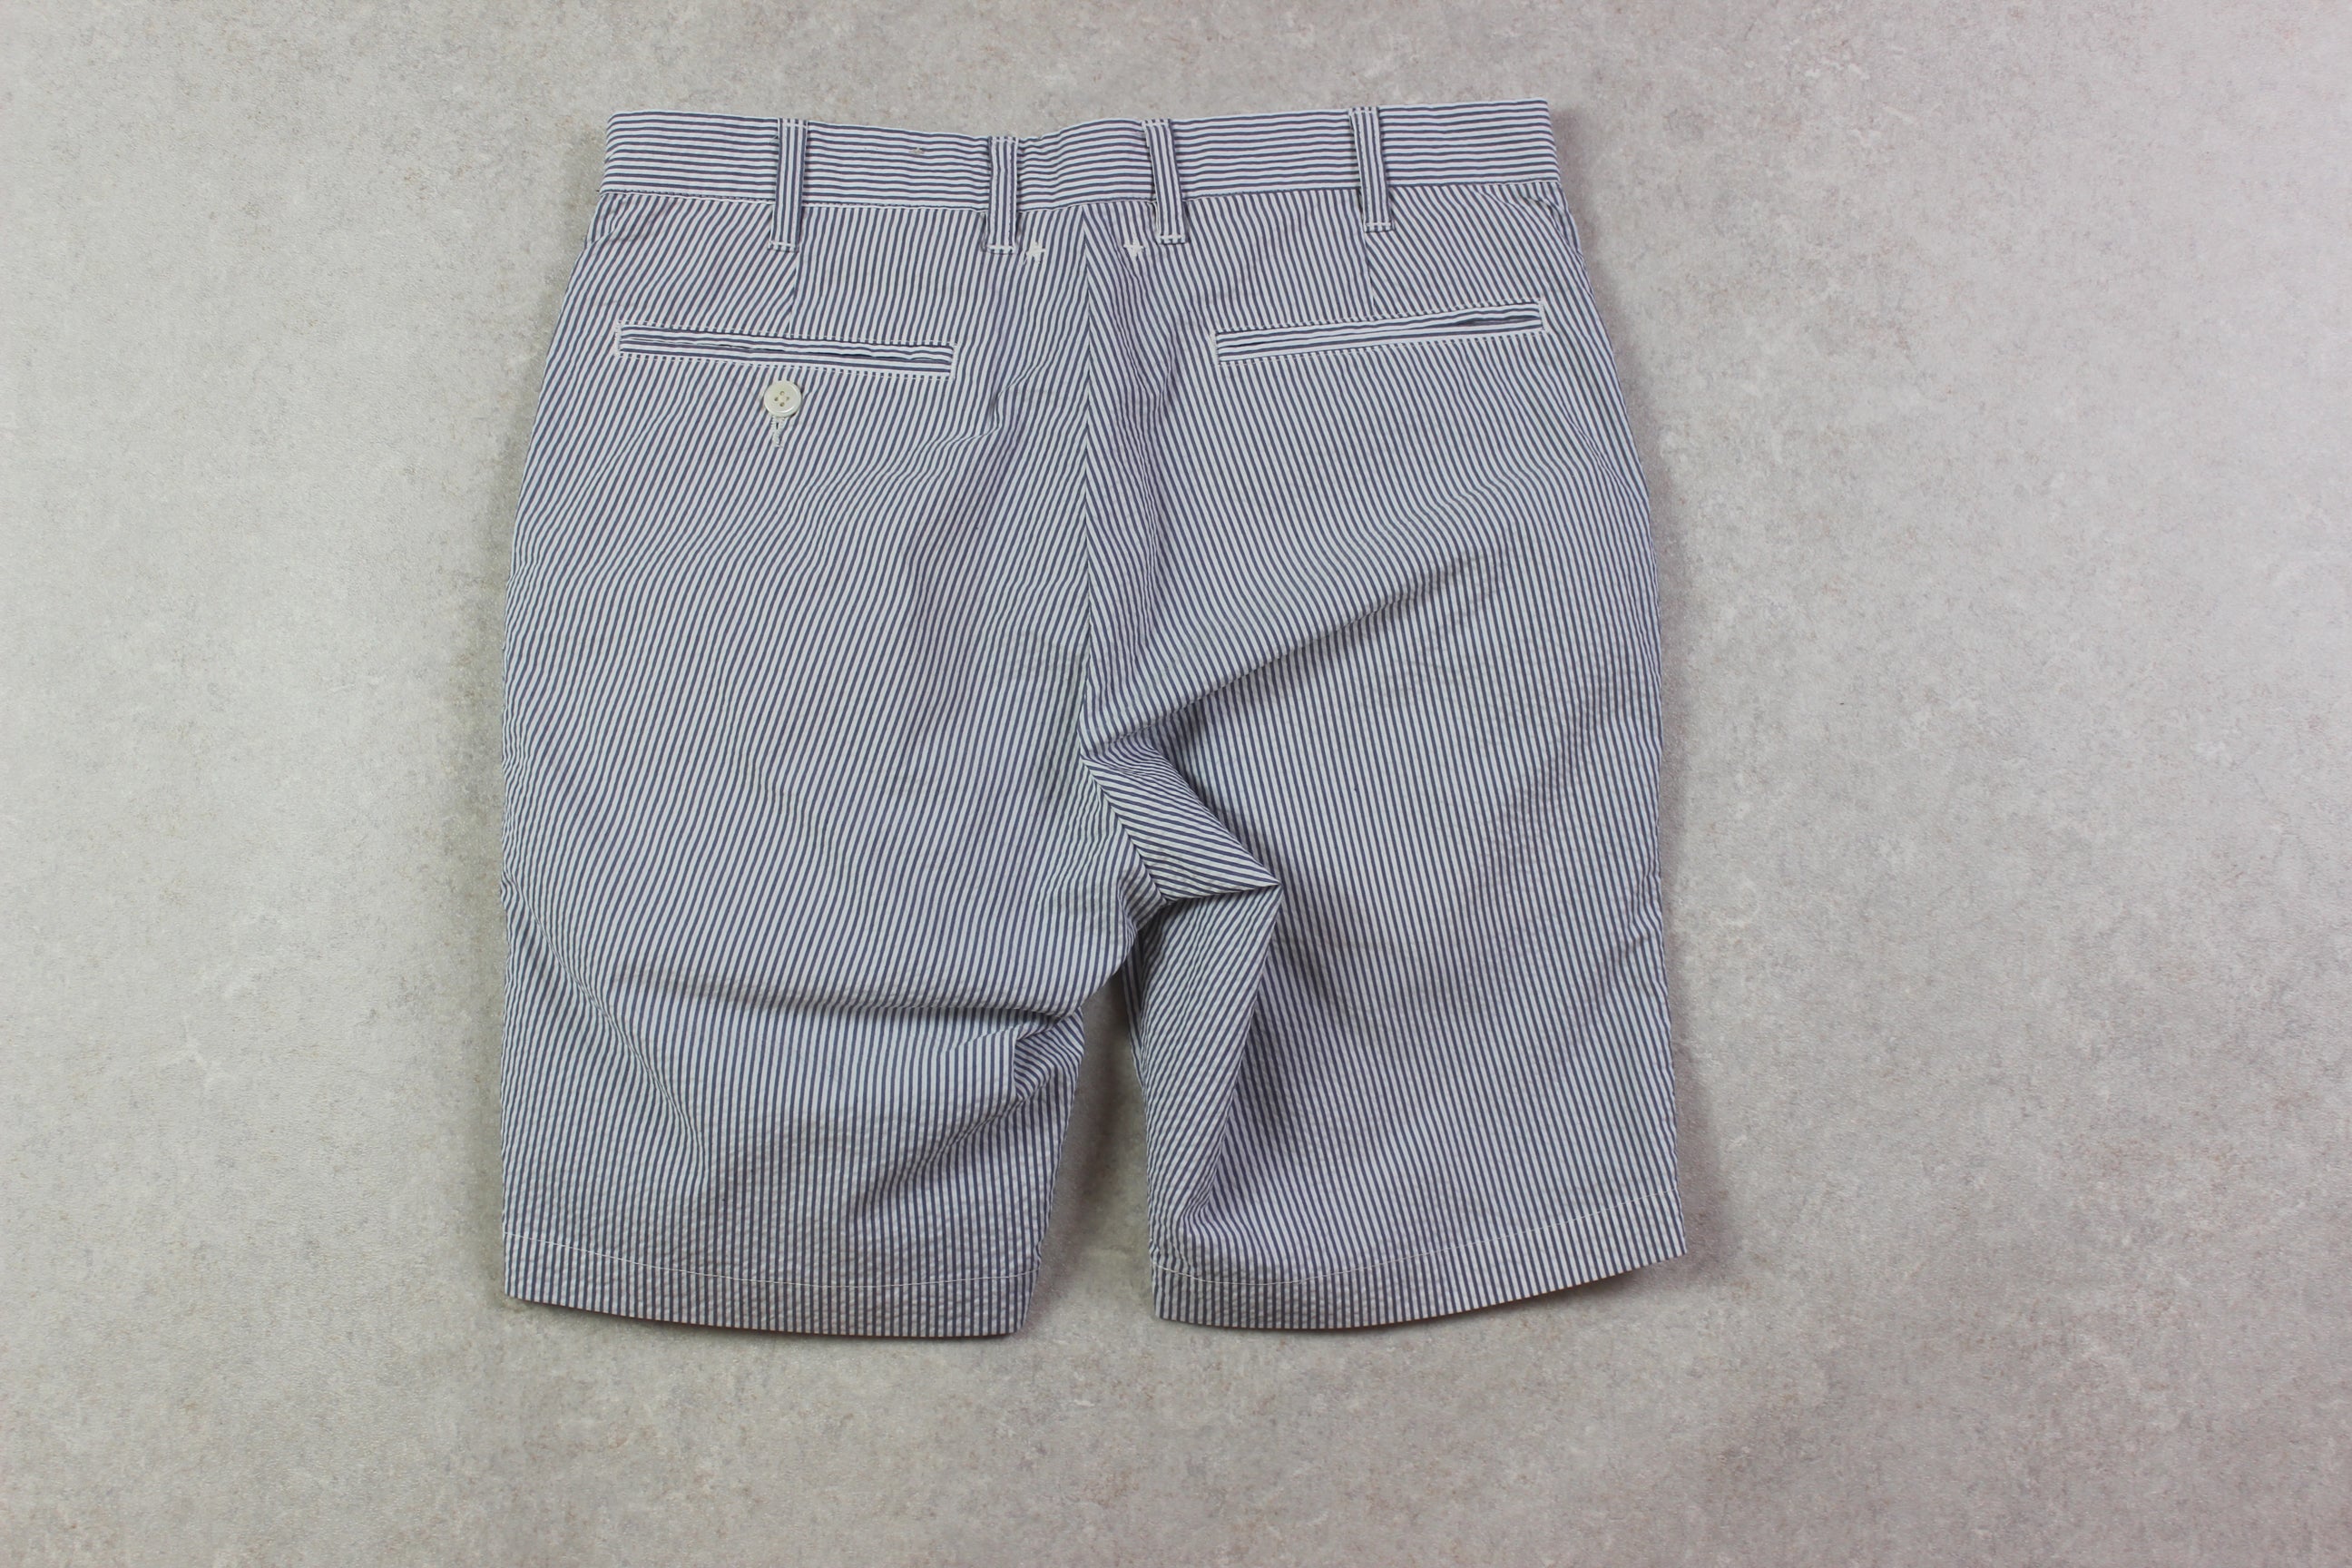 Beams Plus - Shorts - Blue/White Stripe Seersucker - Small/30